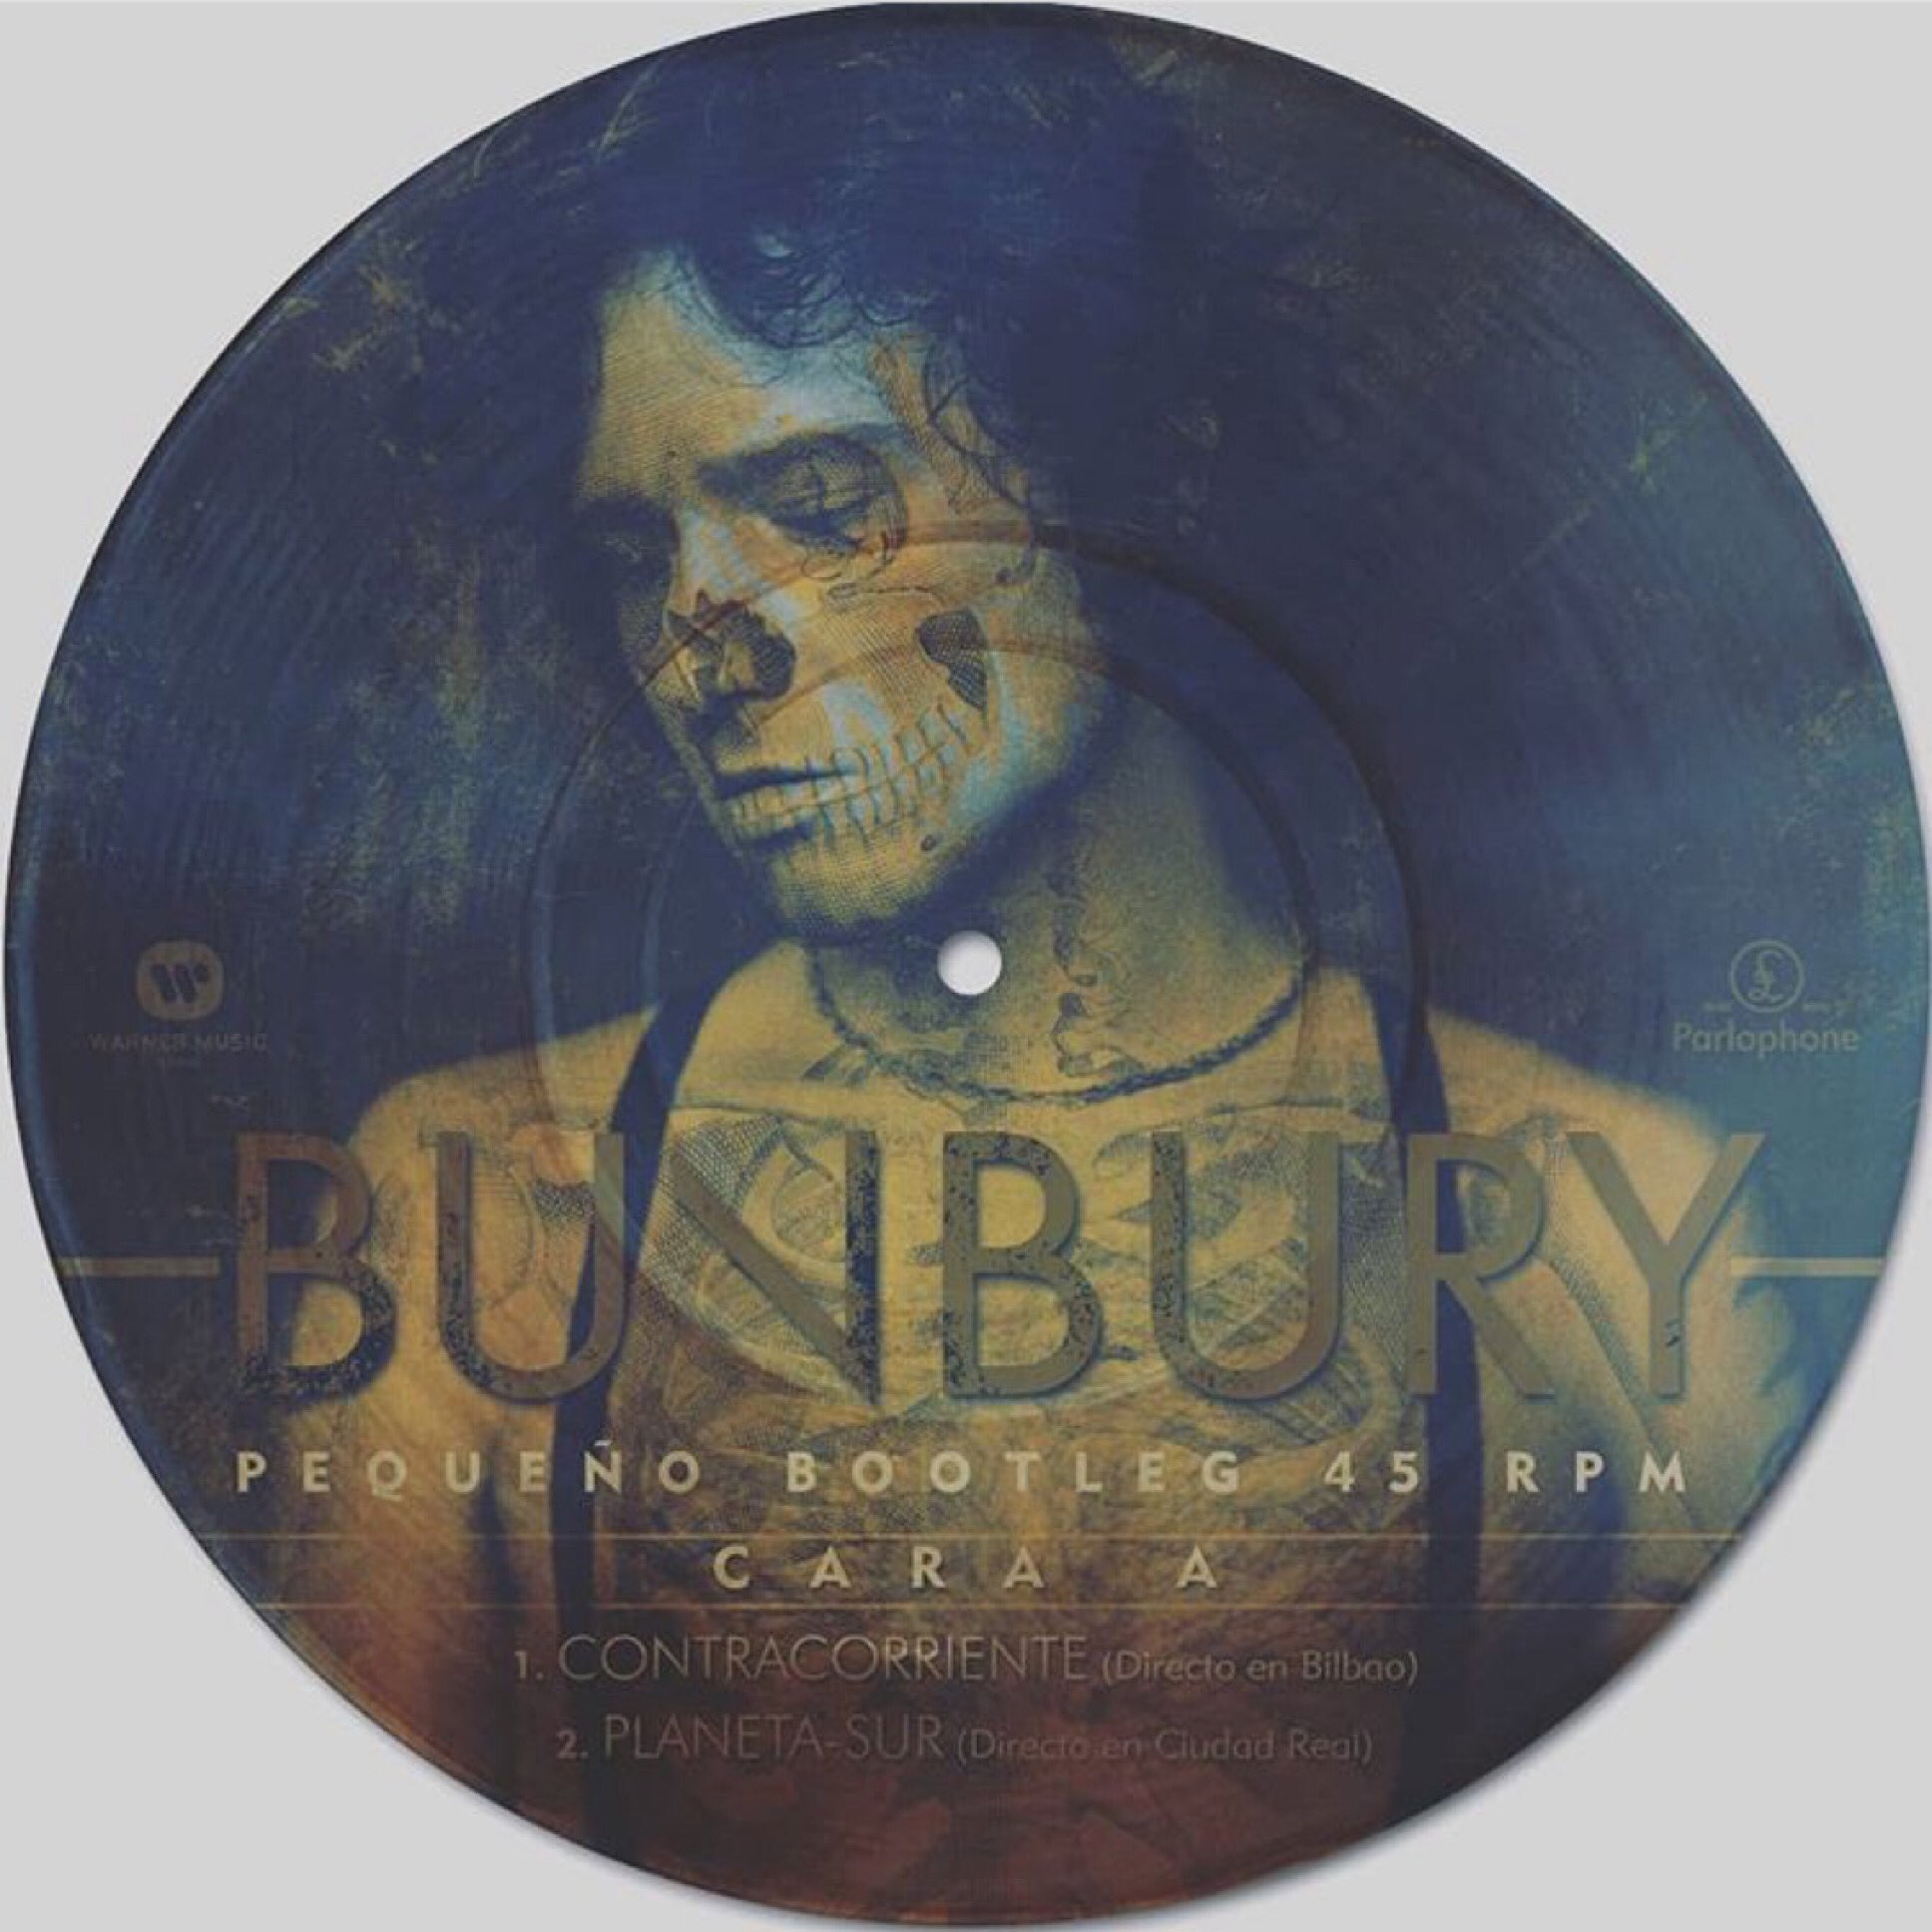 Bunbury "Pequeño Bootleg" Picture 12"